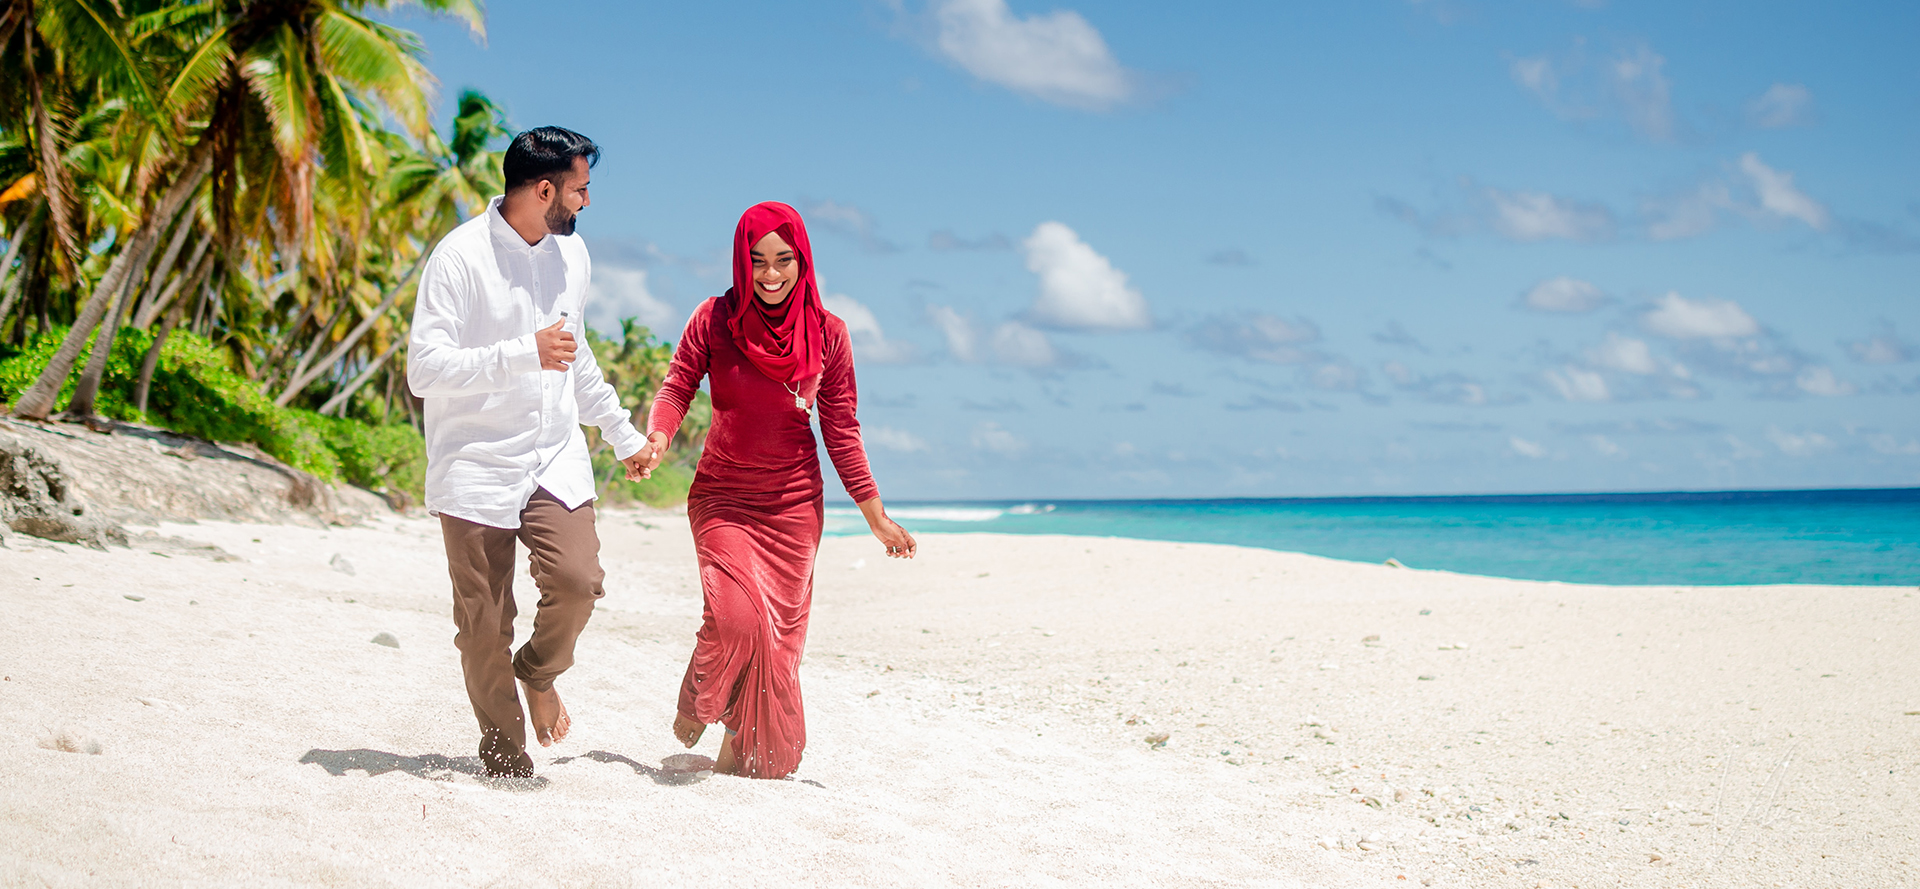 Arabiske singler på en date slentre langs stranden.